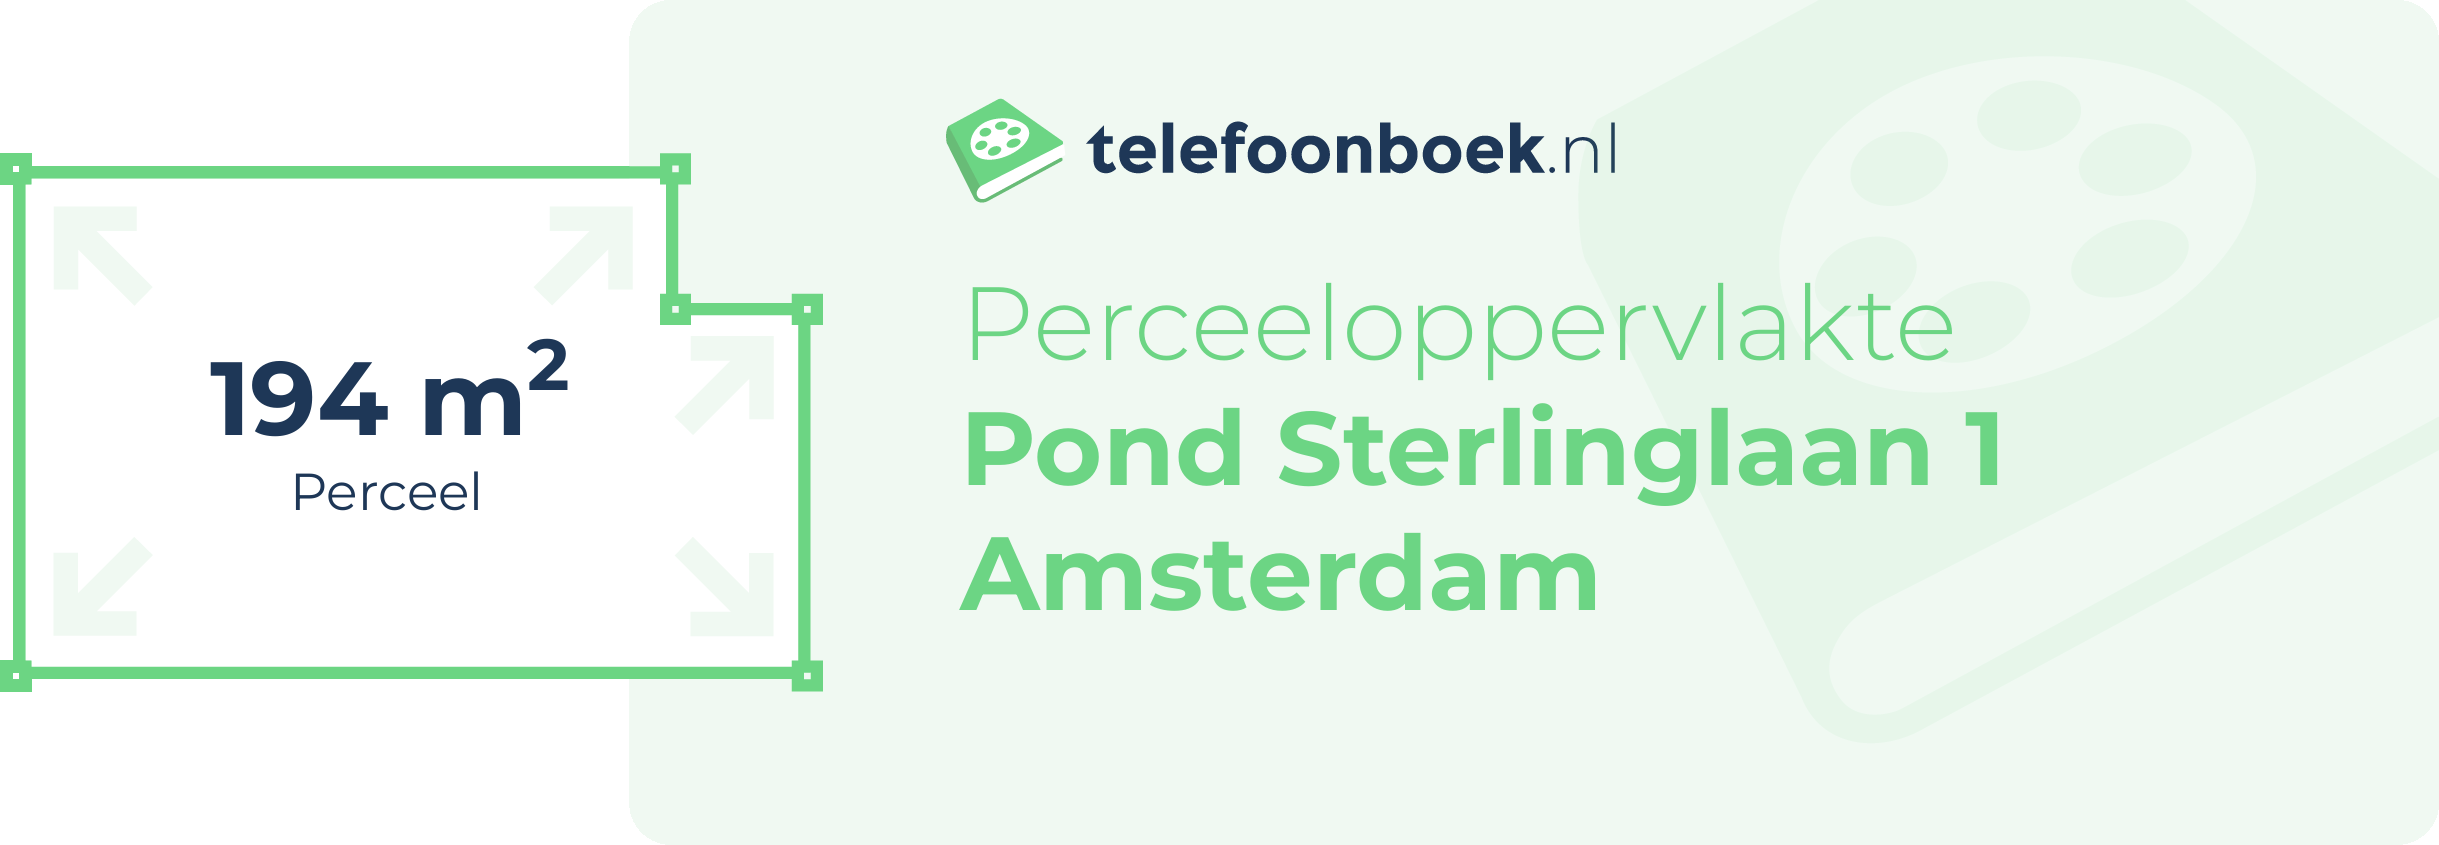 Perceeloppervlakte Pond Sterlinglaan 1 Amsterdam